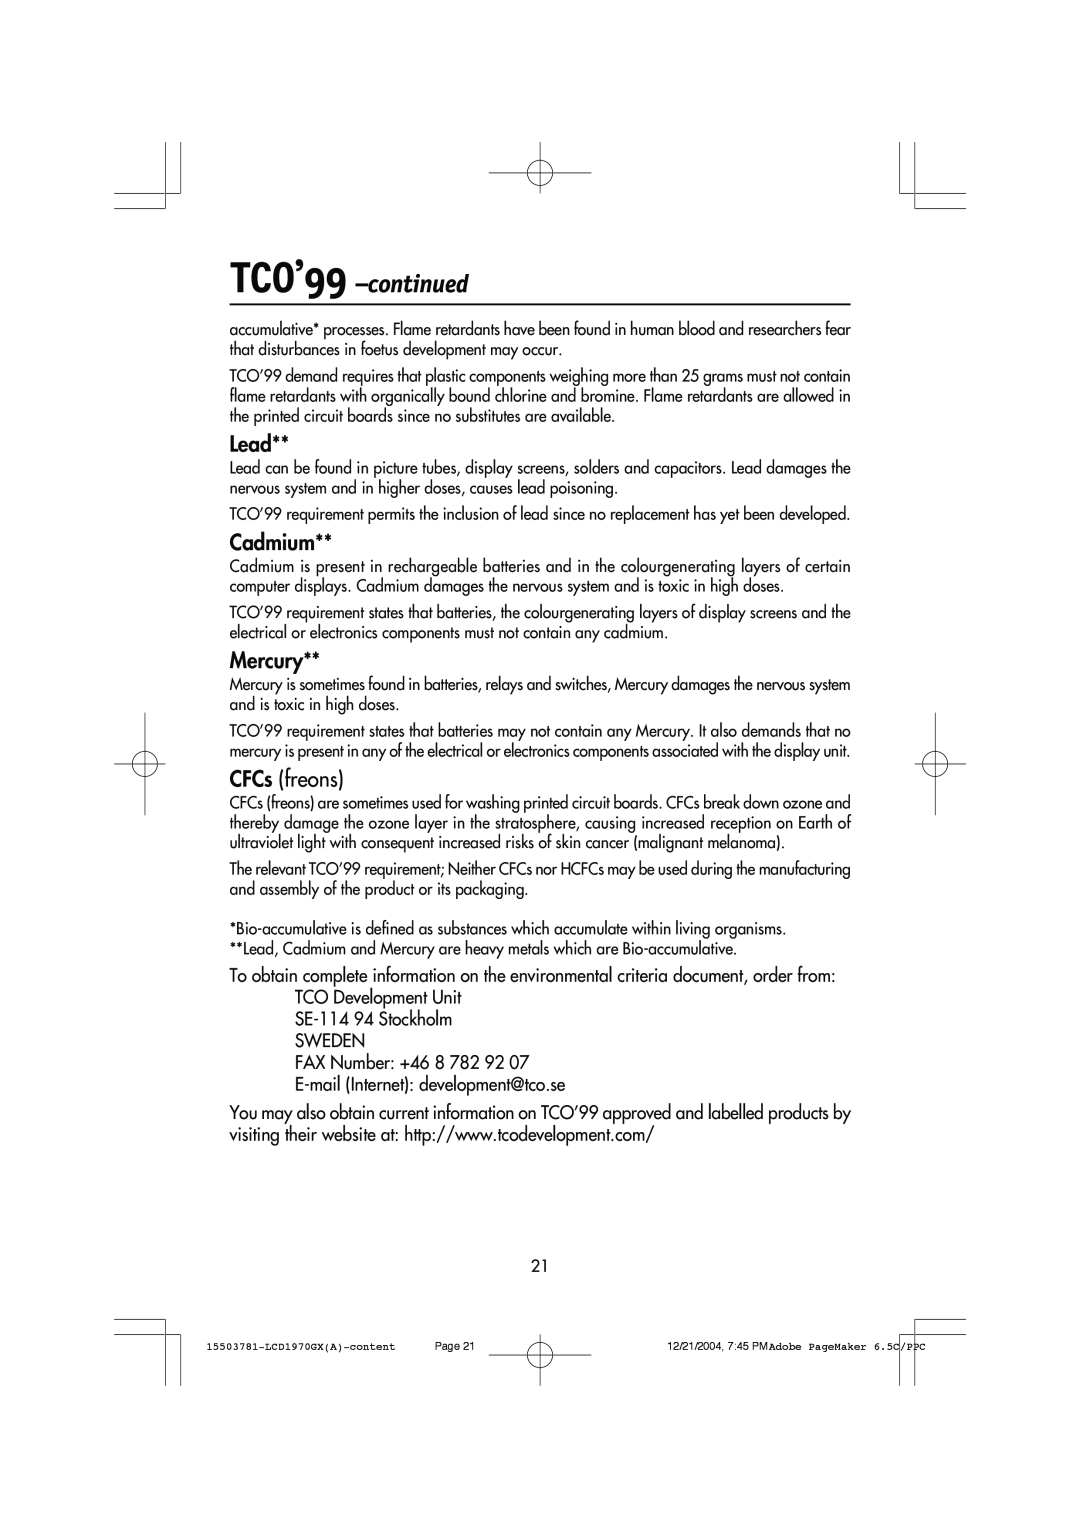 NEC LCD1970GX user manual TCO’99 -continued, Lead, Cadmium, Mercury, CFCs freons 